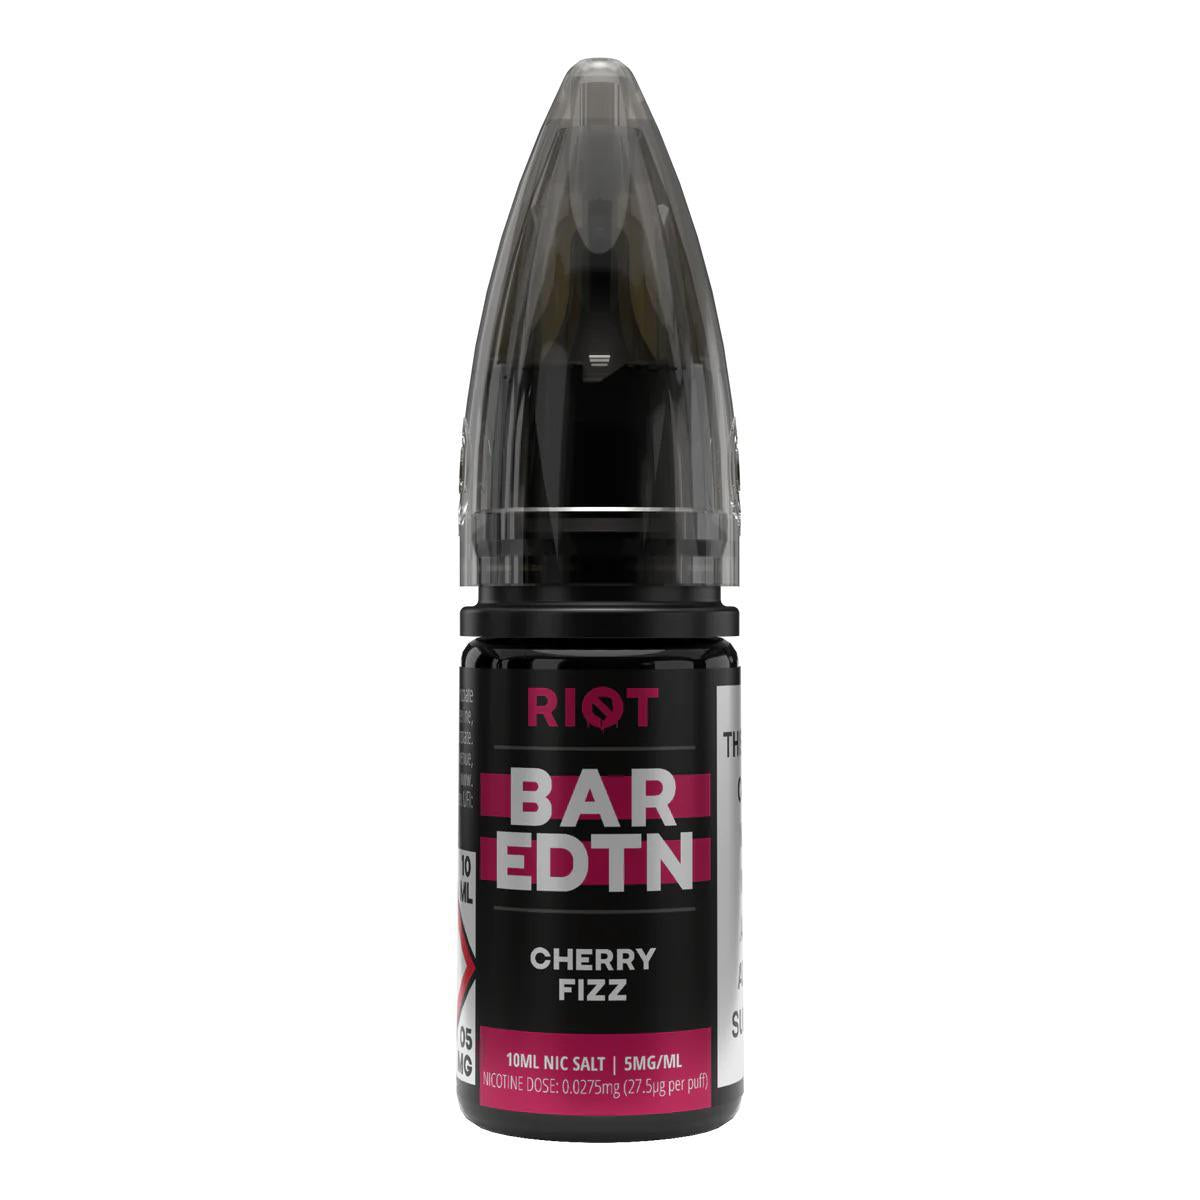 RIOT Bar EDTN - Cherry Fizz 10ml E-Liquid - The British Vape Company